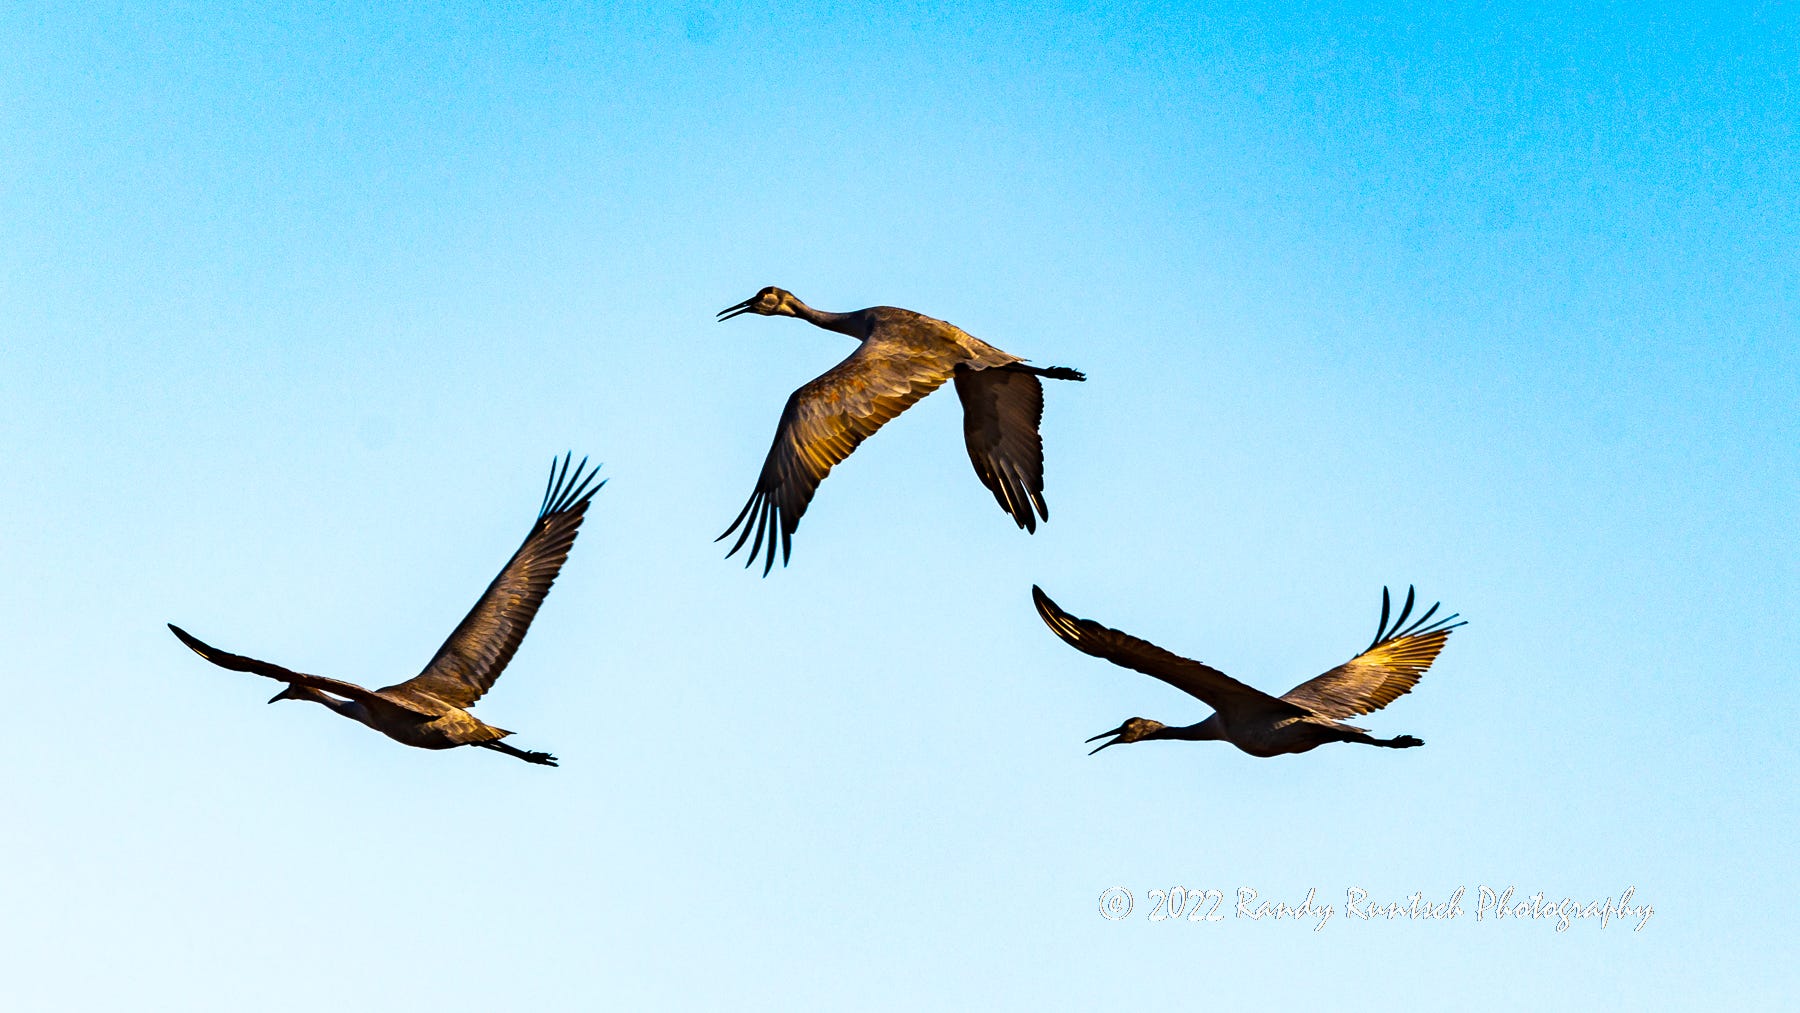 Three Sandhill Cranes in flight.